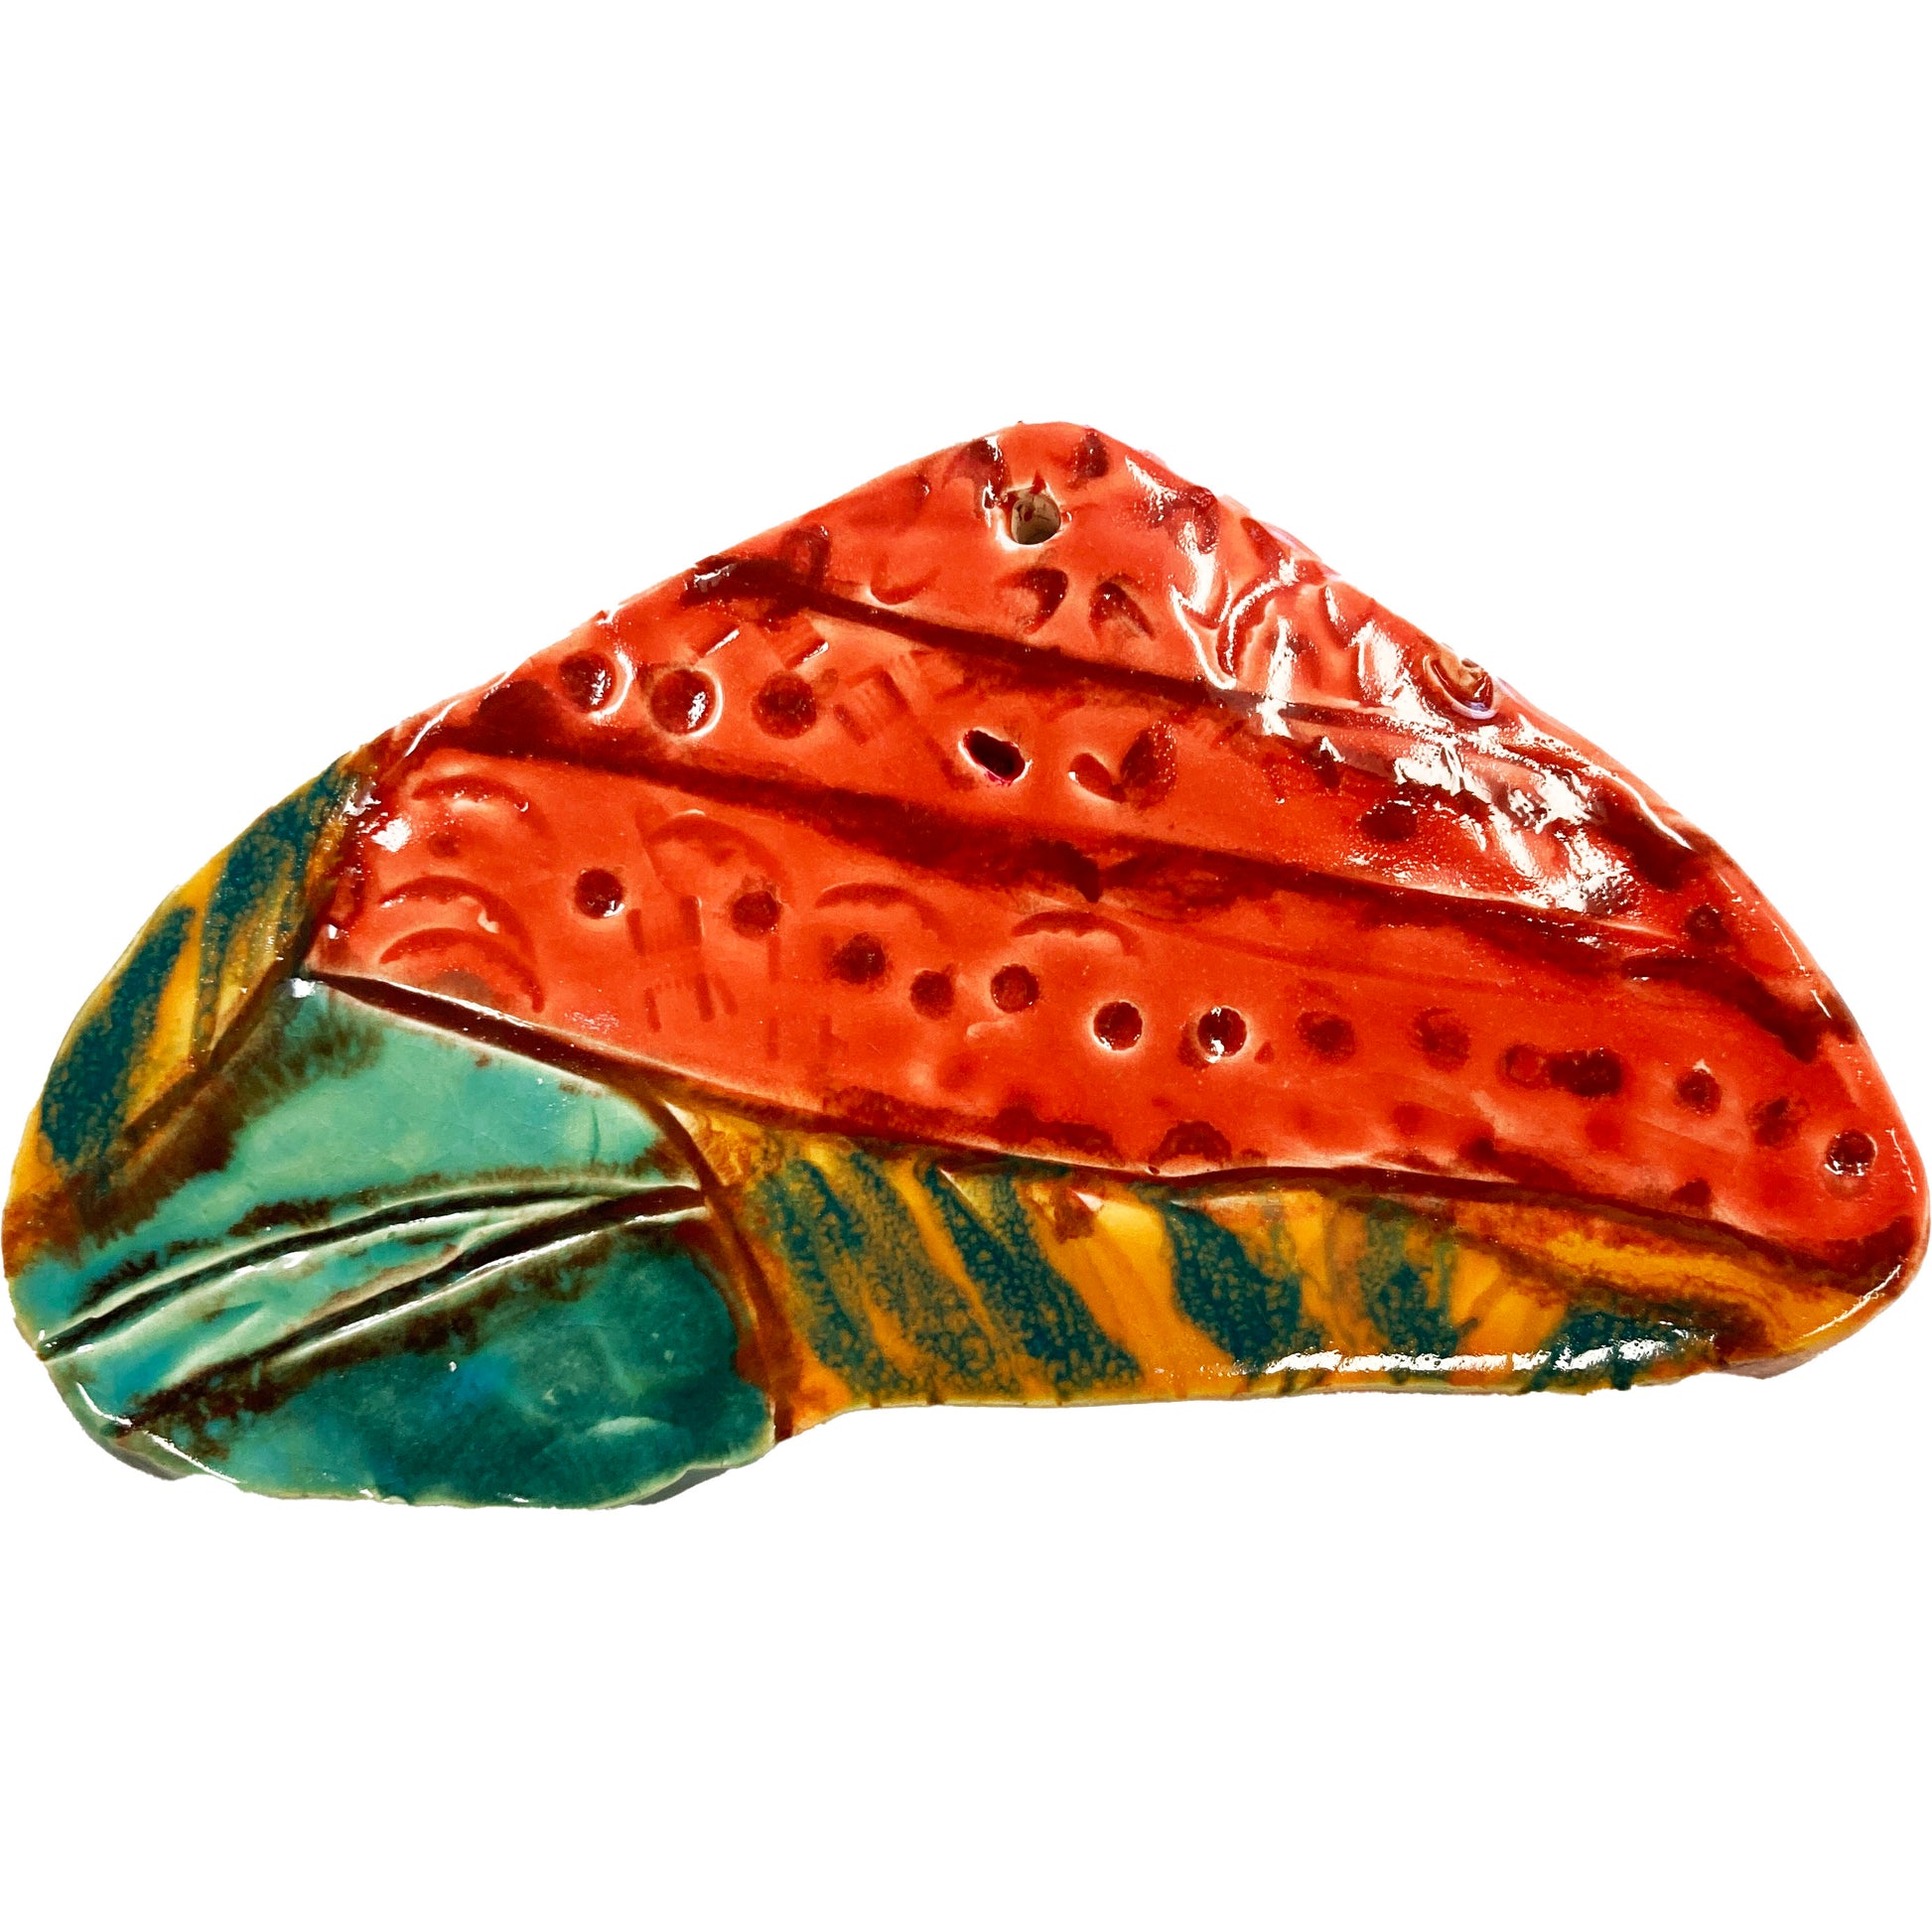 WATCH Resources Art Guild - Ceramic Arts Handmade Clay Crafts 6.5-inch x 3.5-inch Glazed Shell by Terri Smith